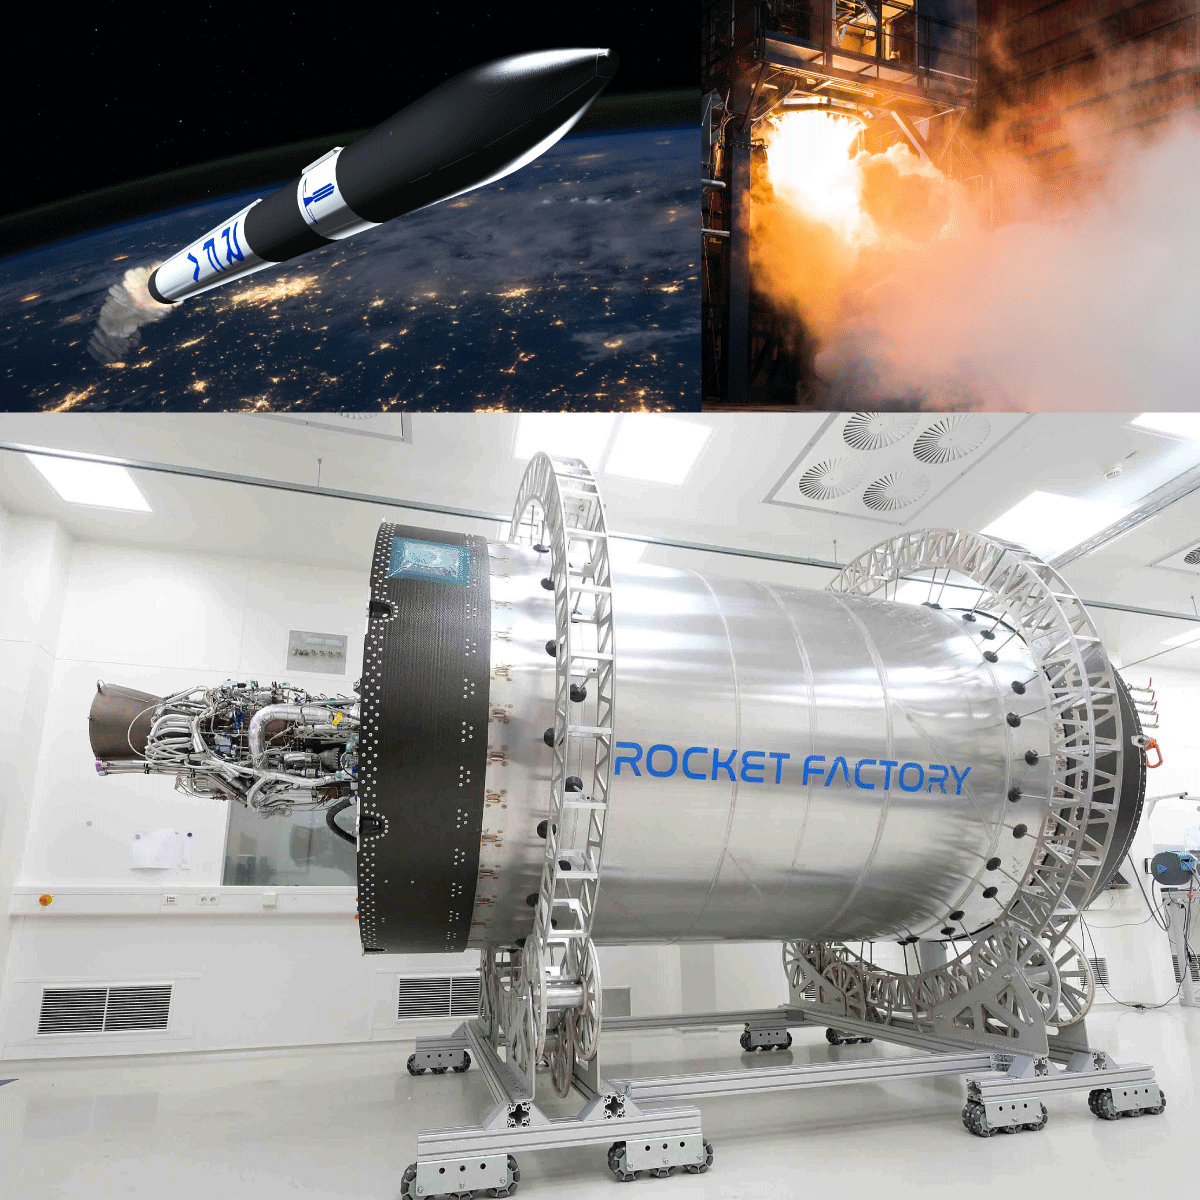 Rocket Factory Augsburg images of rendered rocket in space and integrated rocket in a factory and a rocket test fire